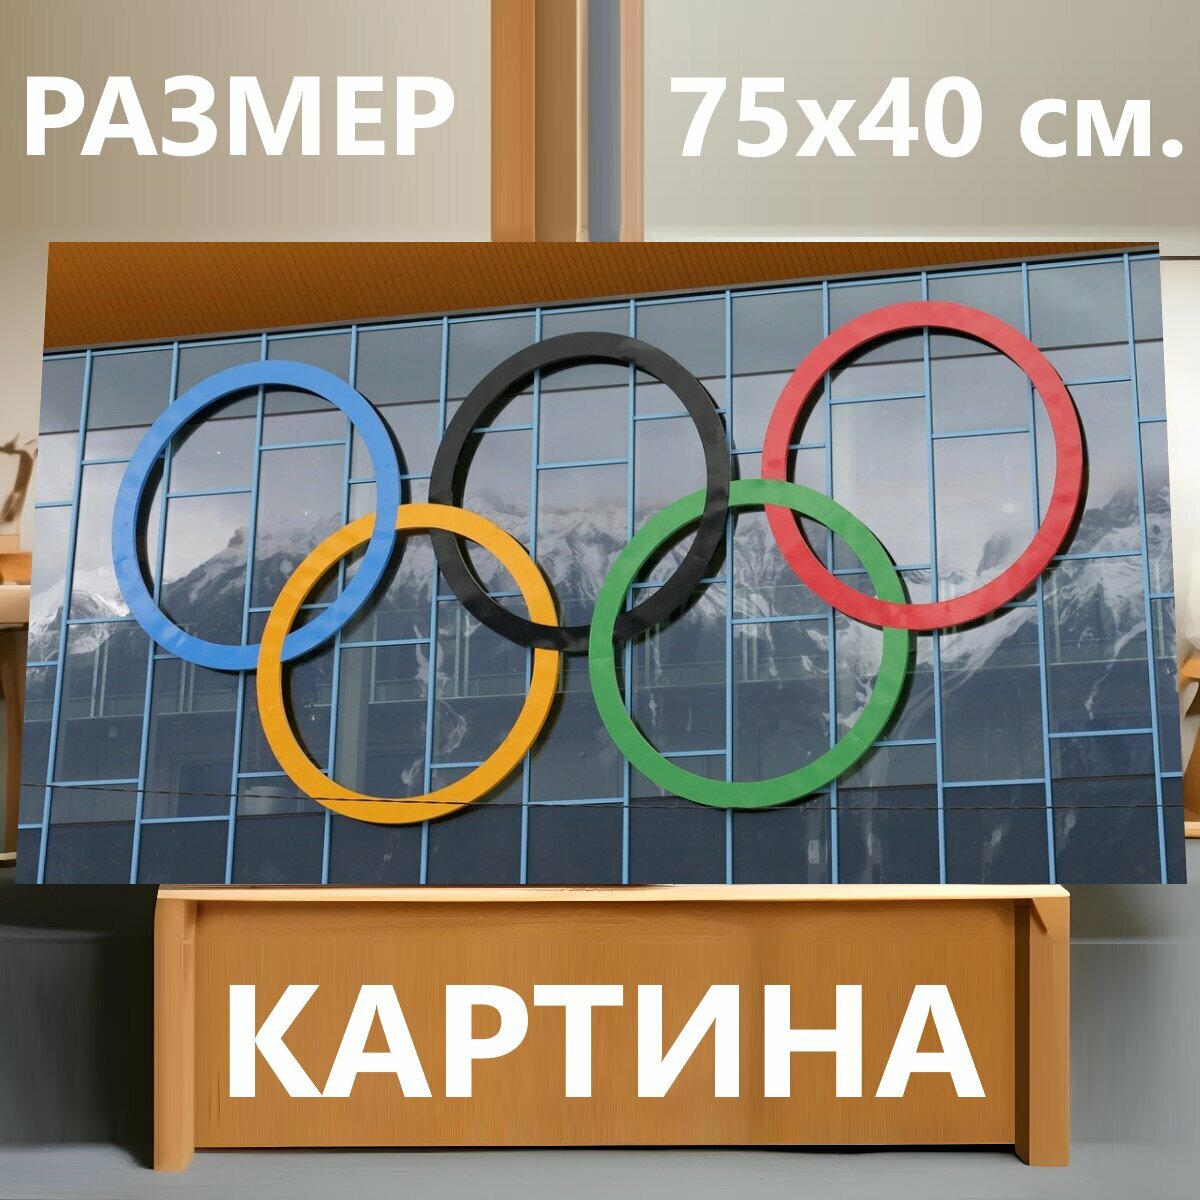 Картина на холсте "Олимпийские кольца, олимпиада, кольца" на подрамнике 75х40 см. для интерьера